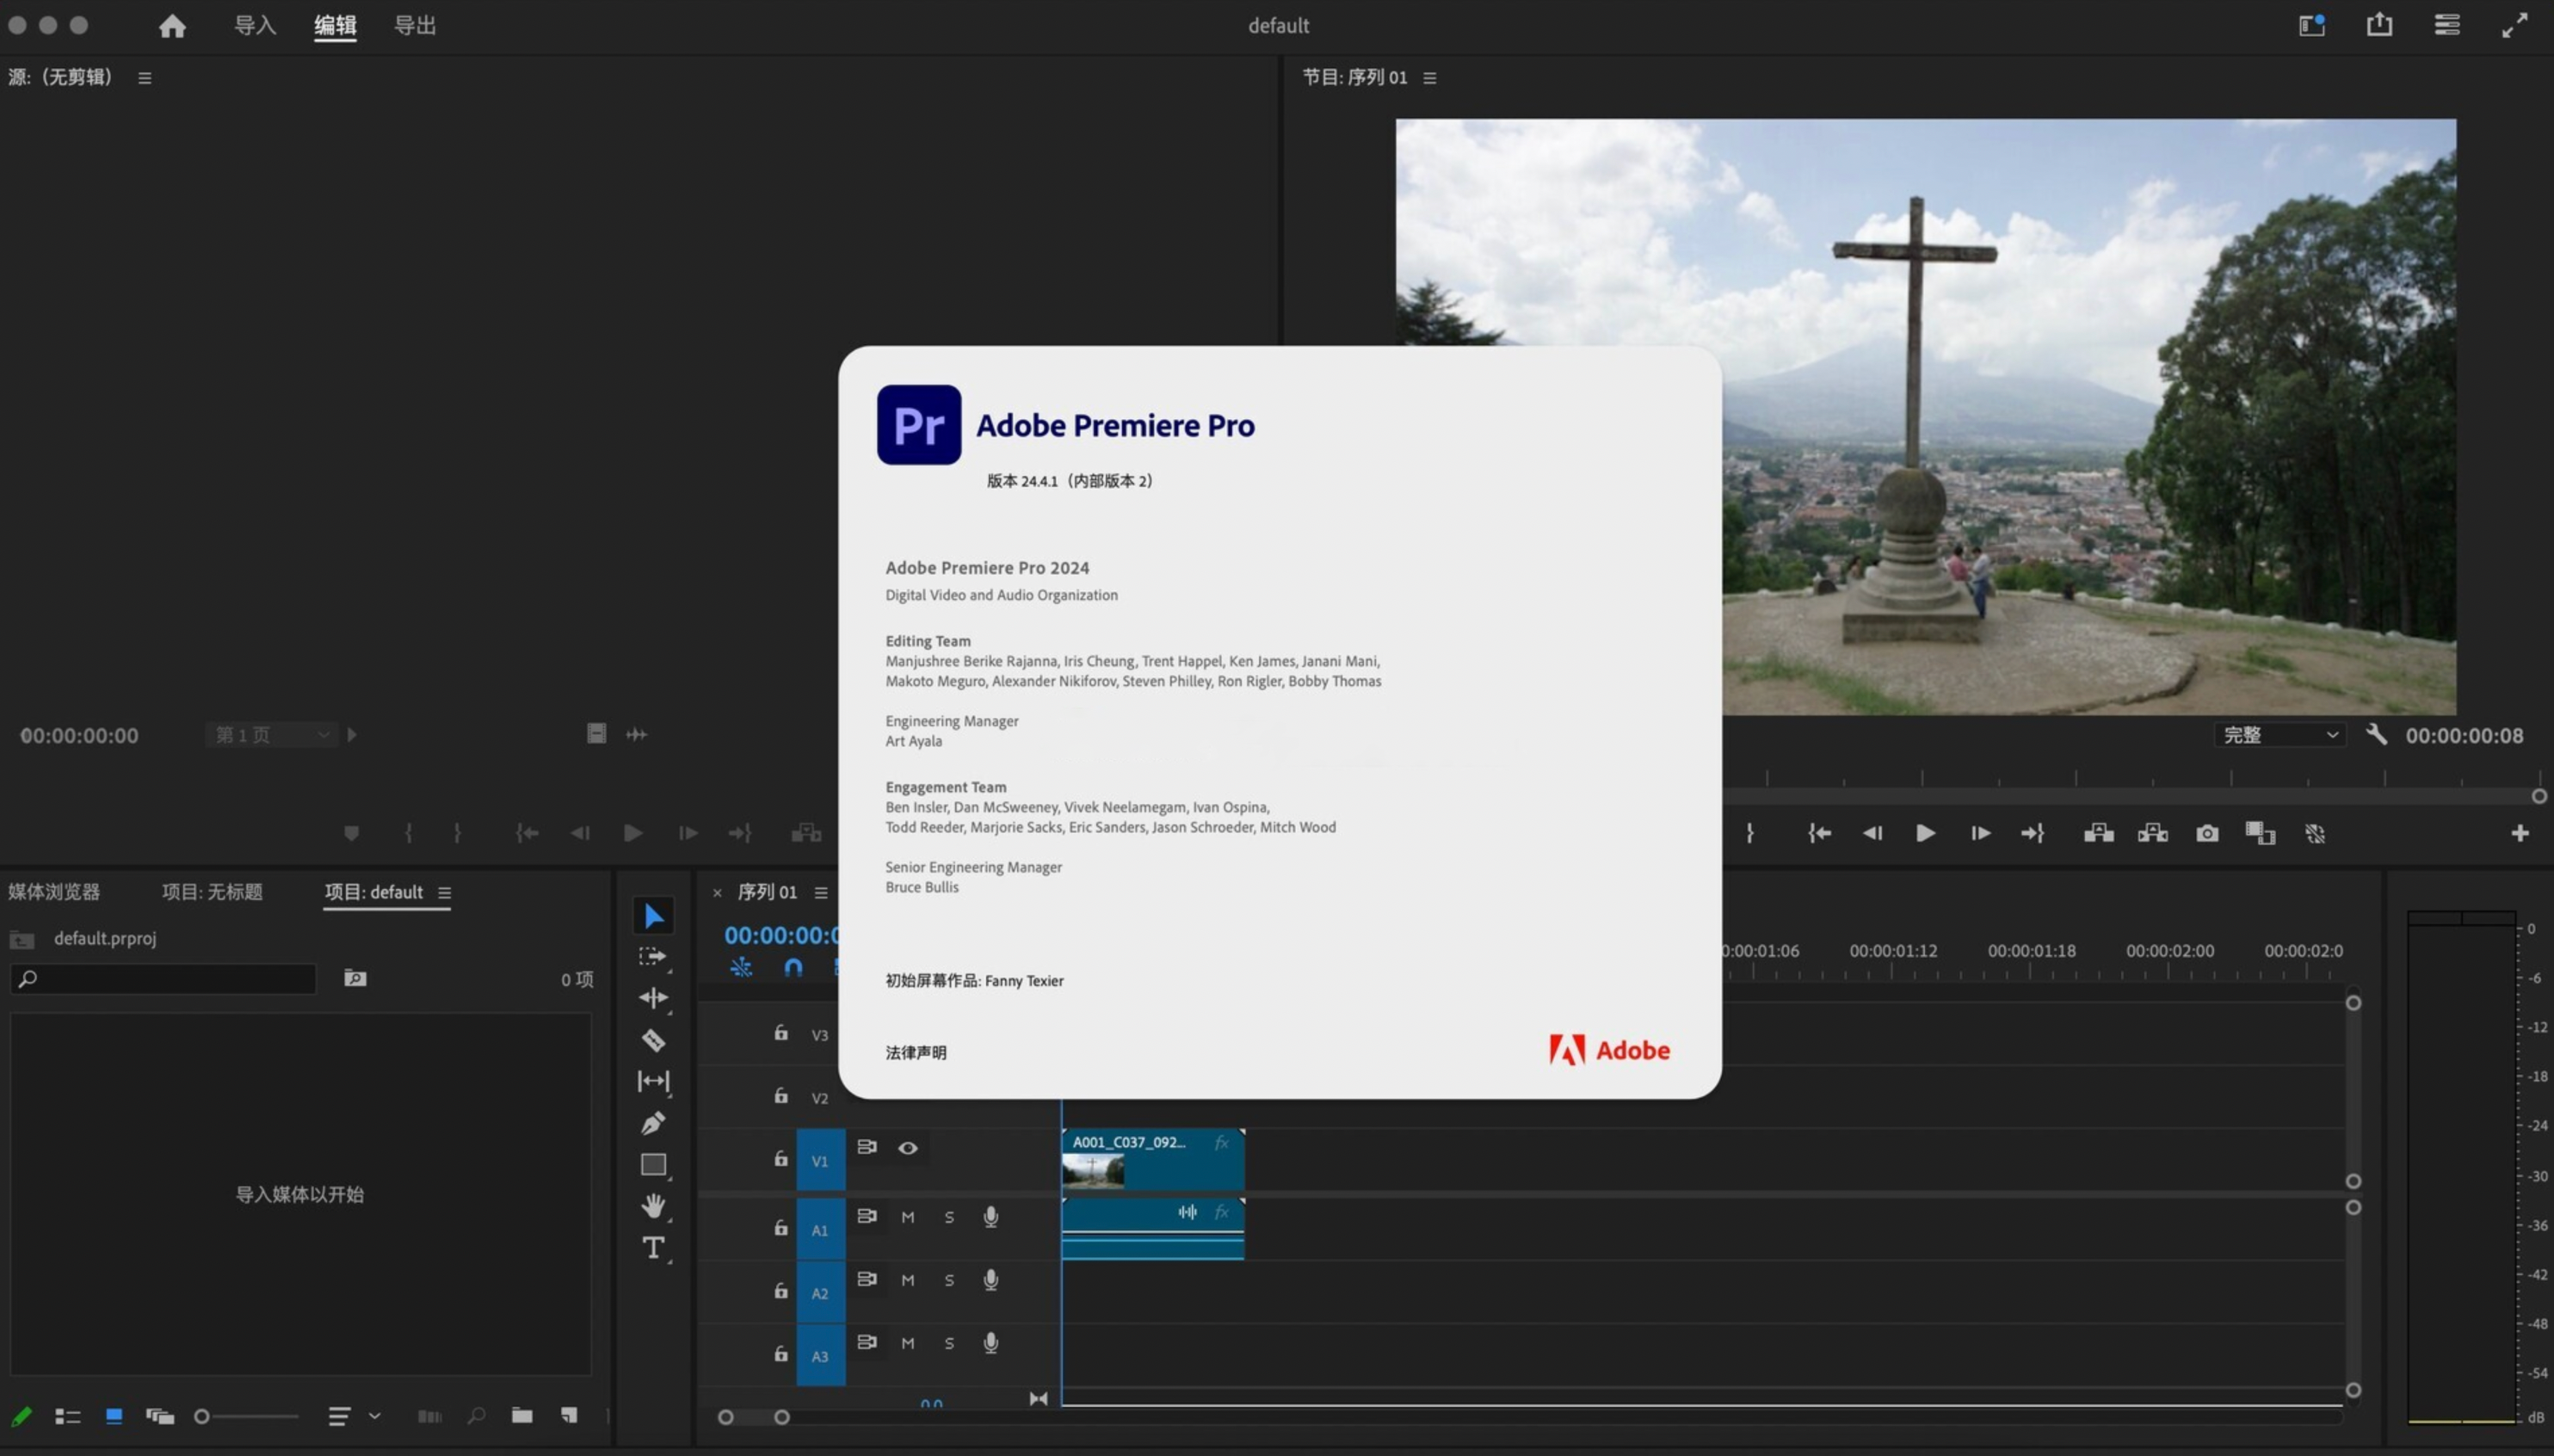 Adobe Premiere Pro 2024 for Mac v24.4.1 PR2024视频编辑软件 免激活下载-1